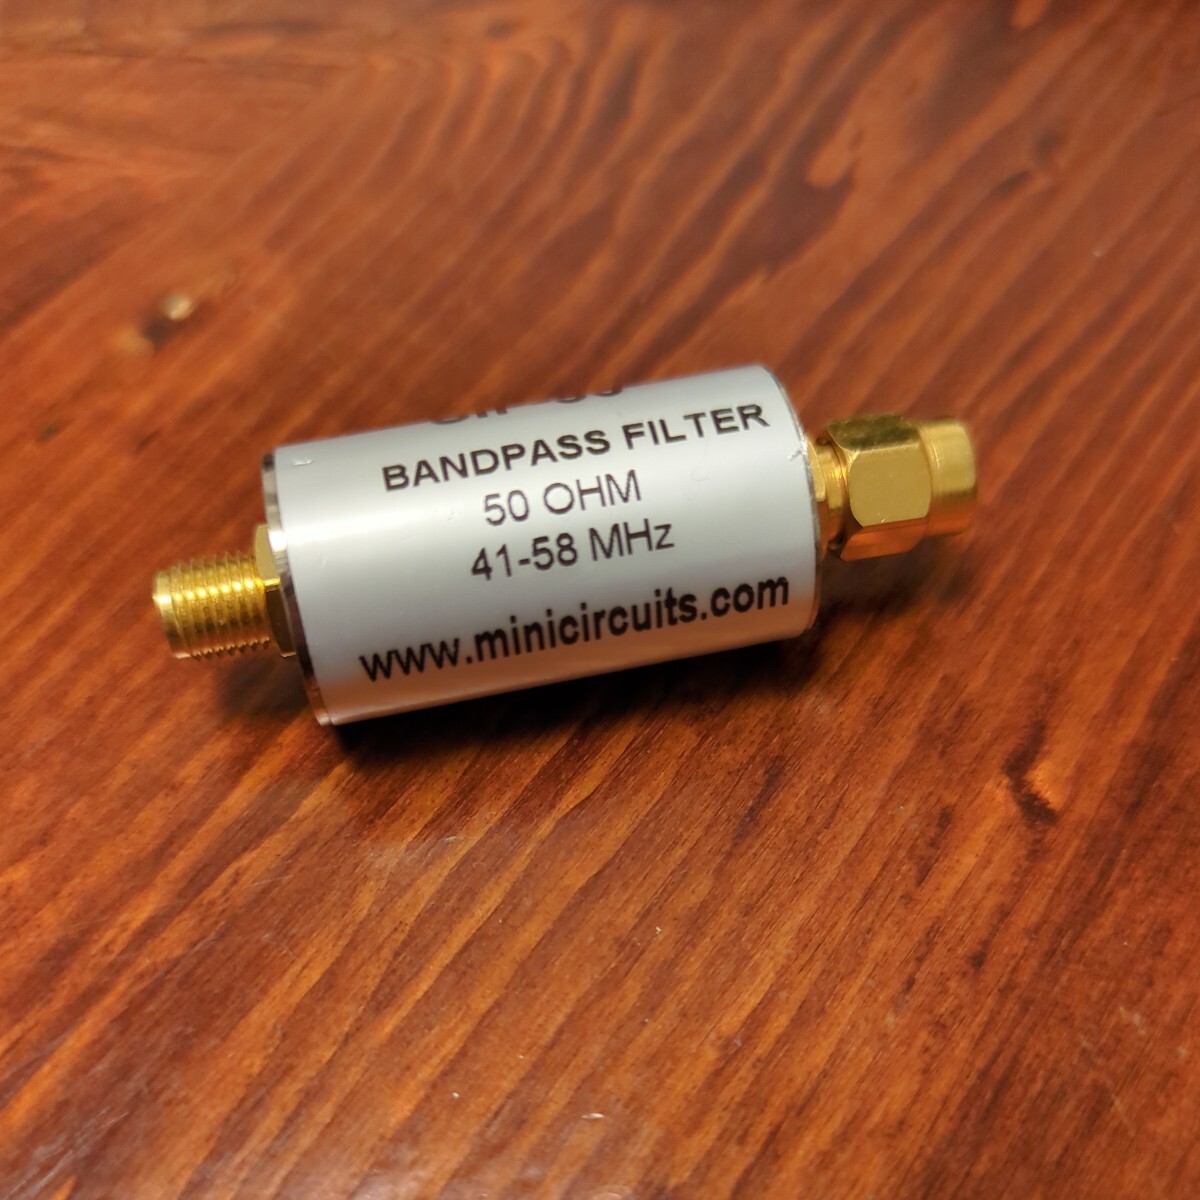 Mini-Circuits SIF-50 Lumped LC Band Pass Filter, 41 - 58 MHz, 50 ミニサーキット社製 バンドパスフィルタの画像2